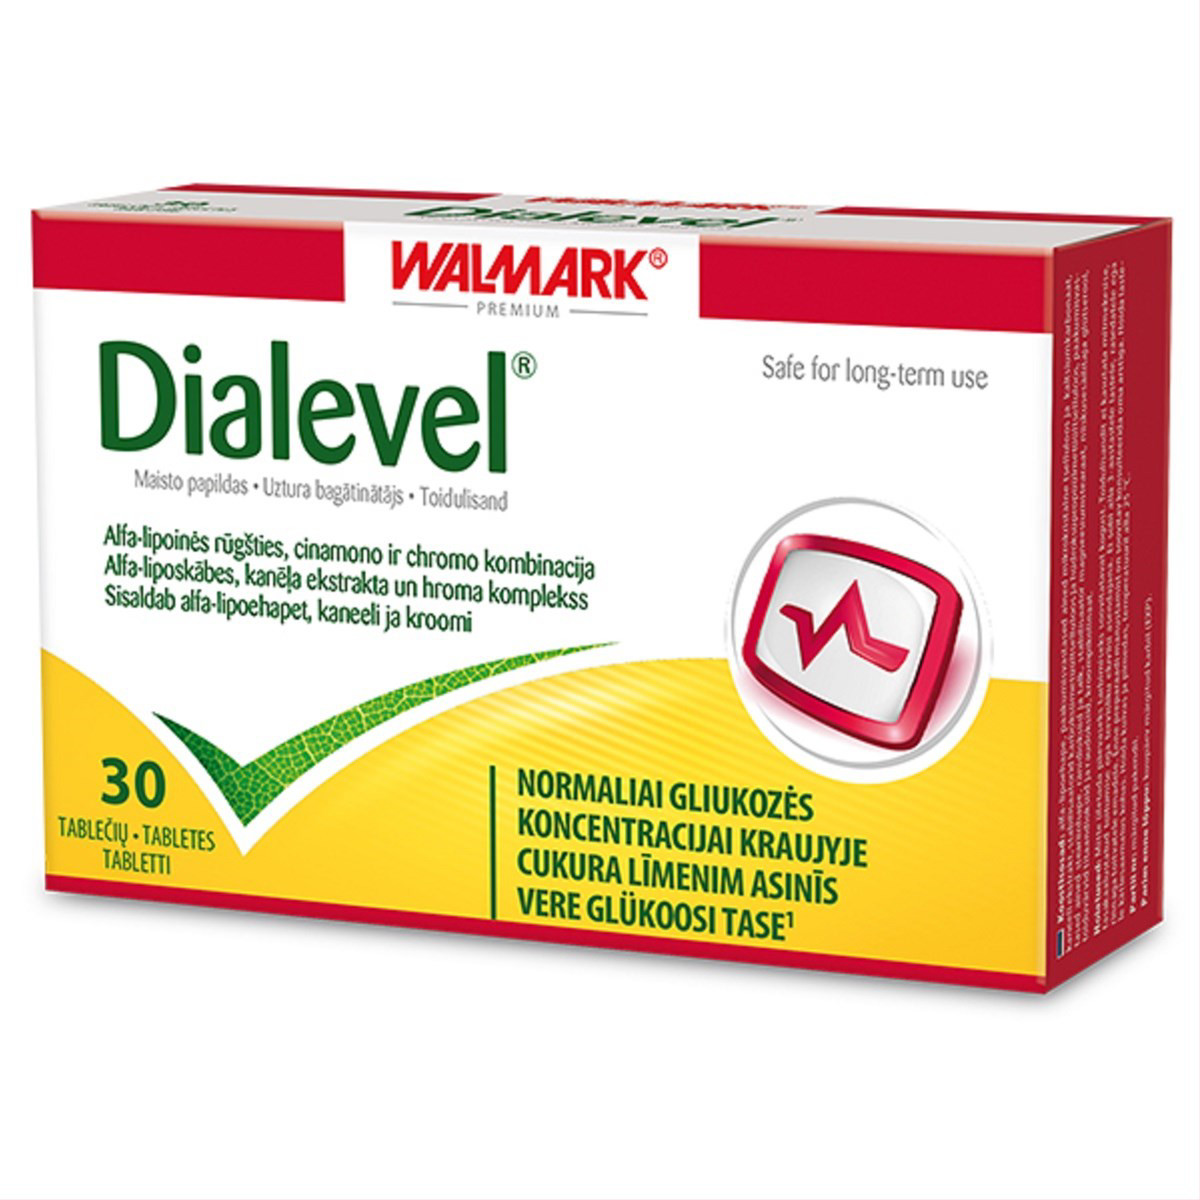 WALMARK DIALEVEL, 30 tablečių